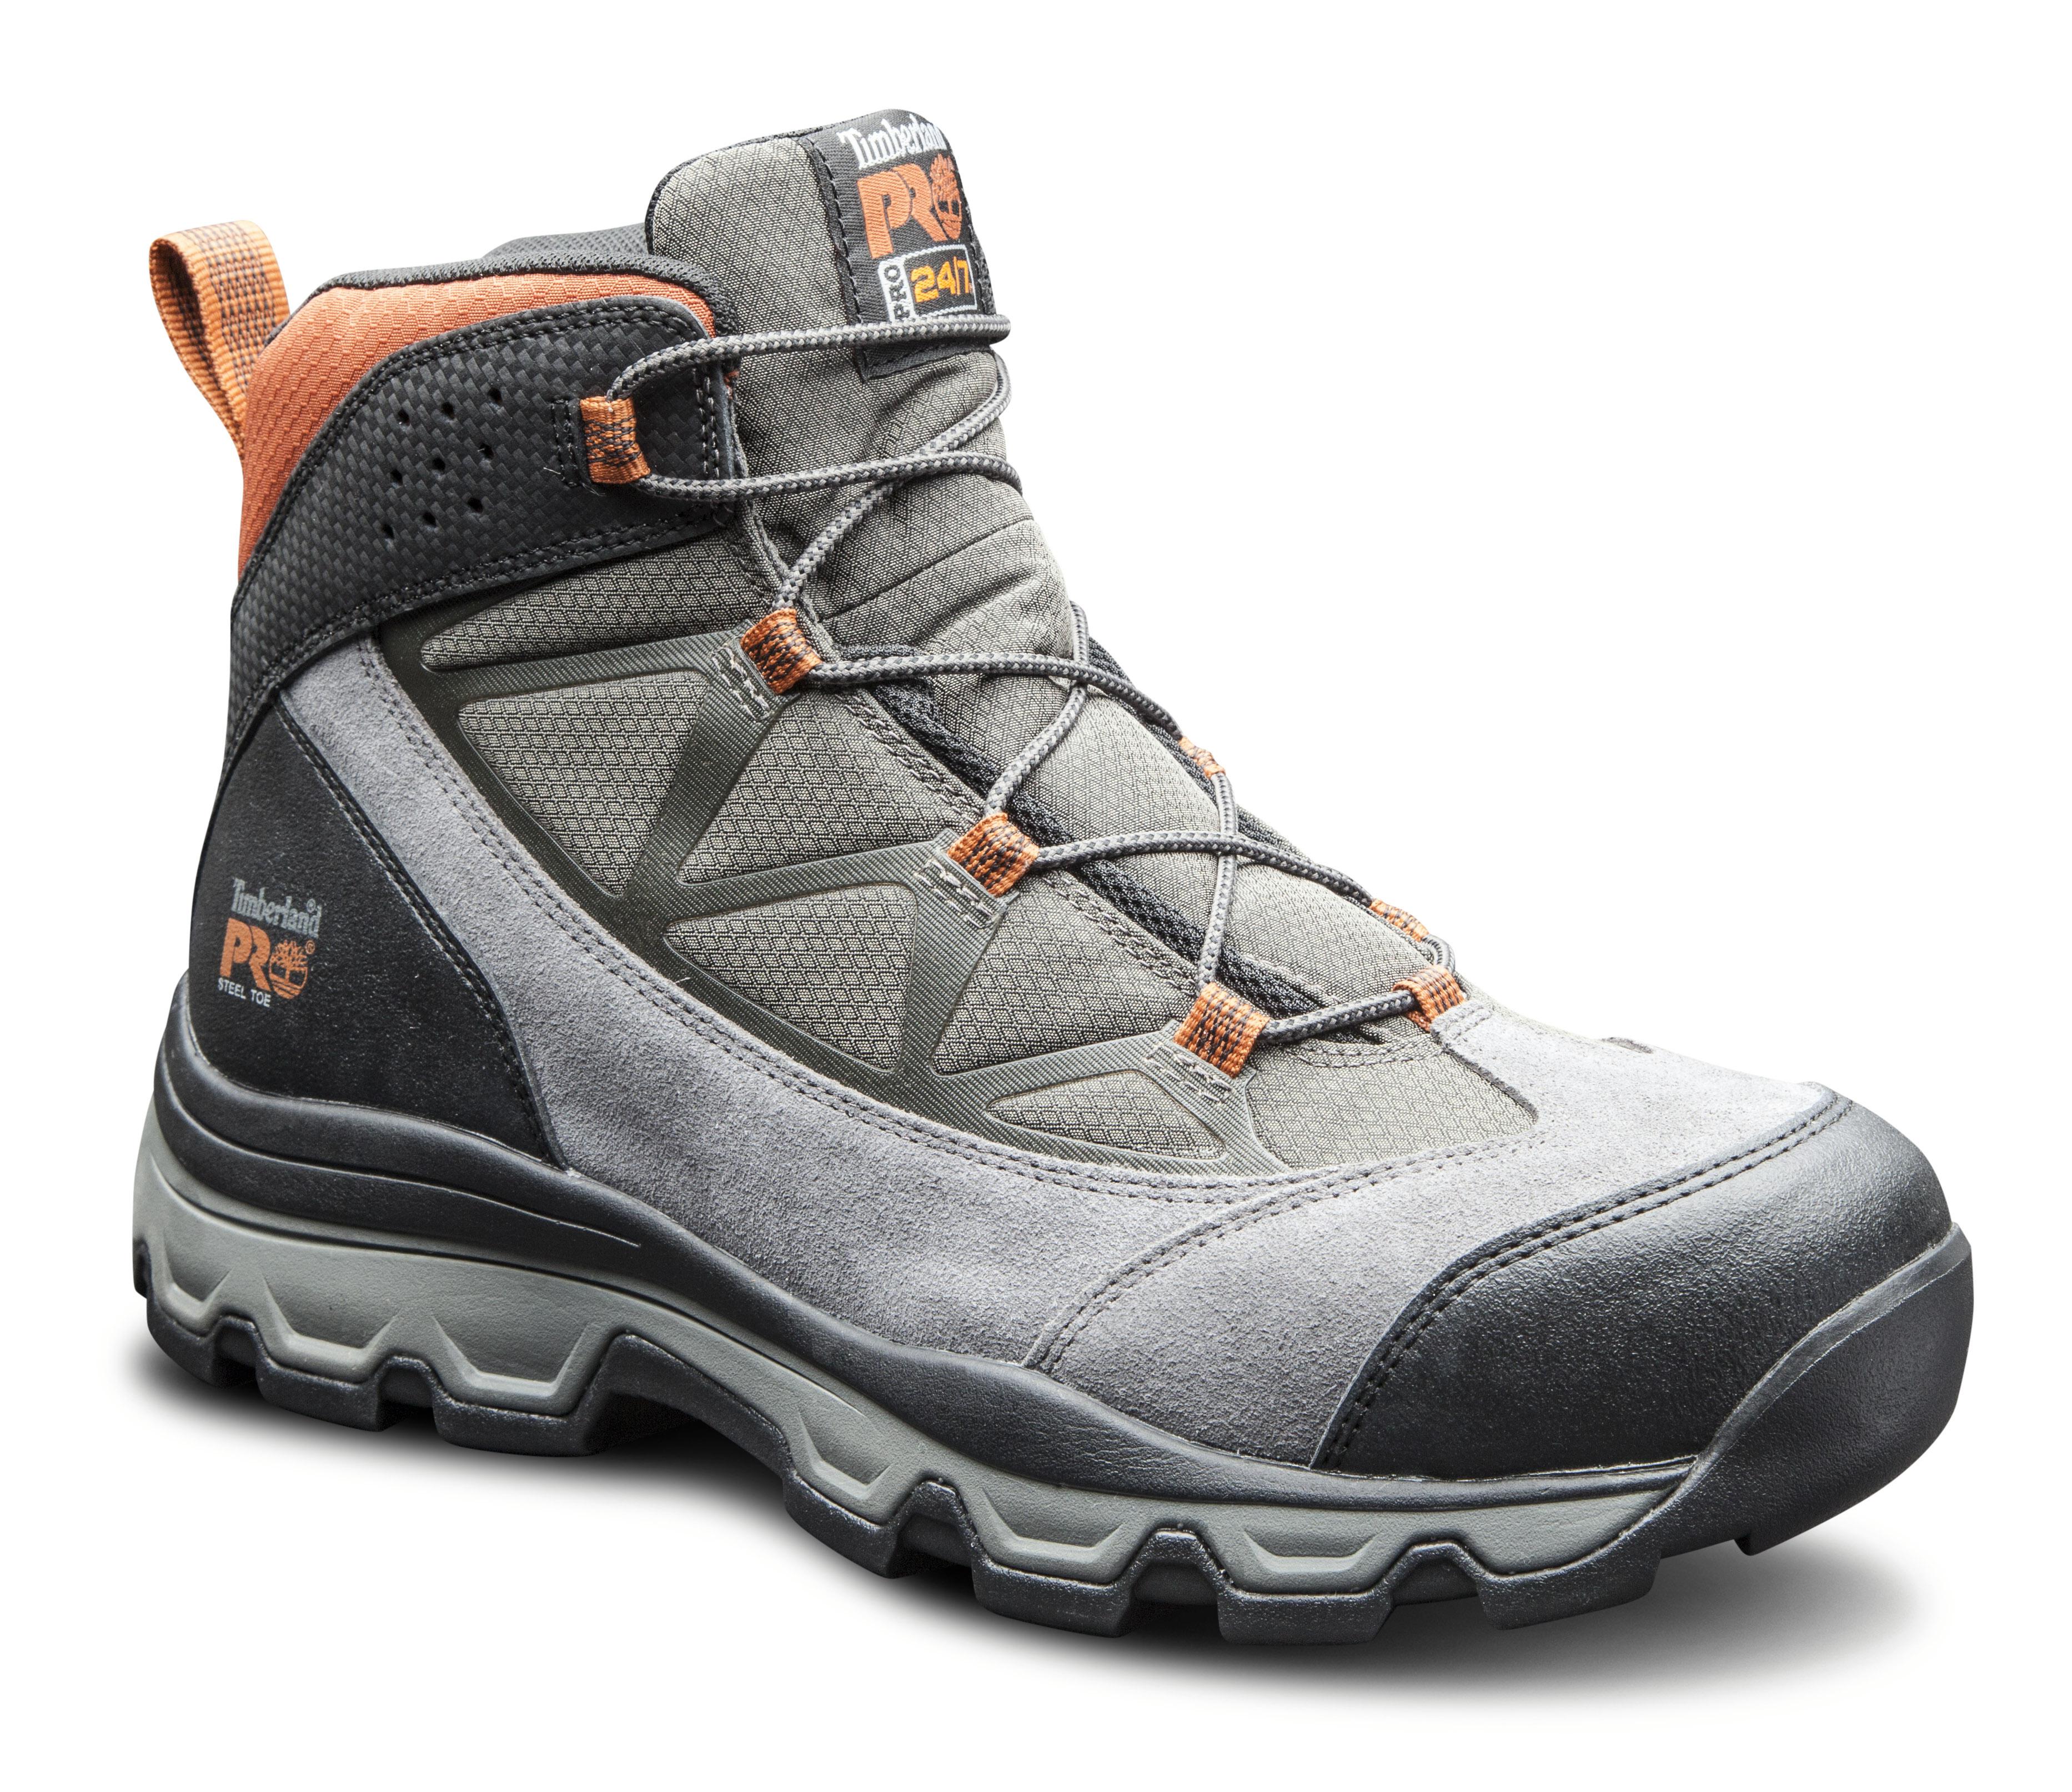 Timberland PRO Men's Rockscape Gray/Orange Steel Toe Work Boot - Wide Width Available